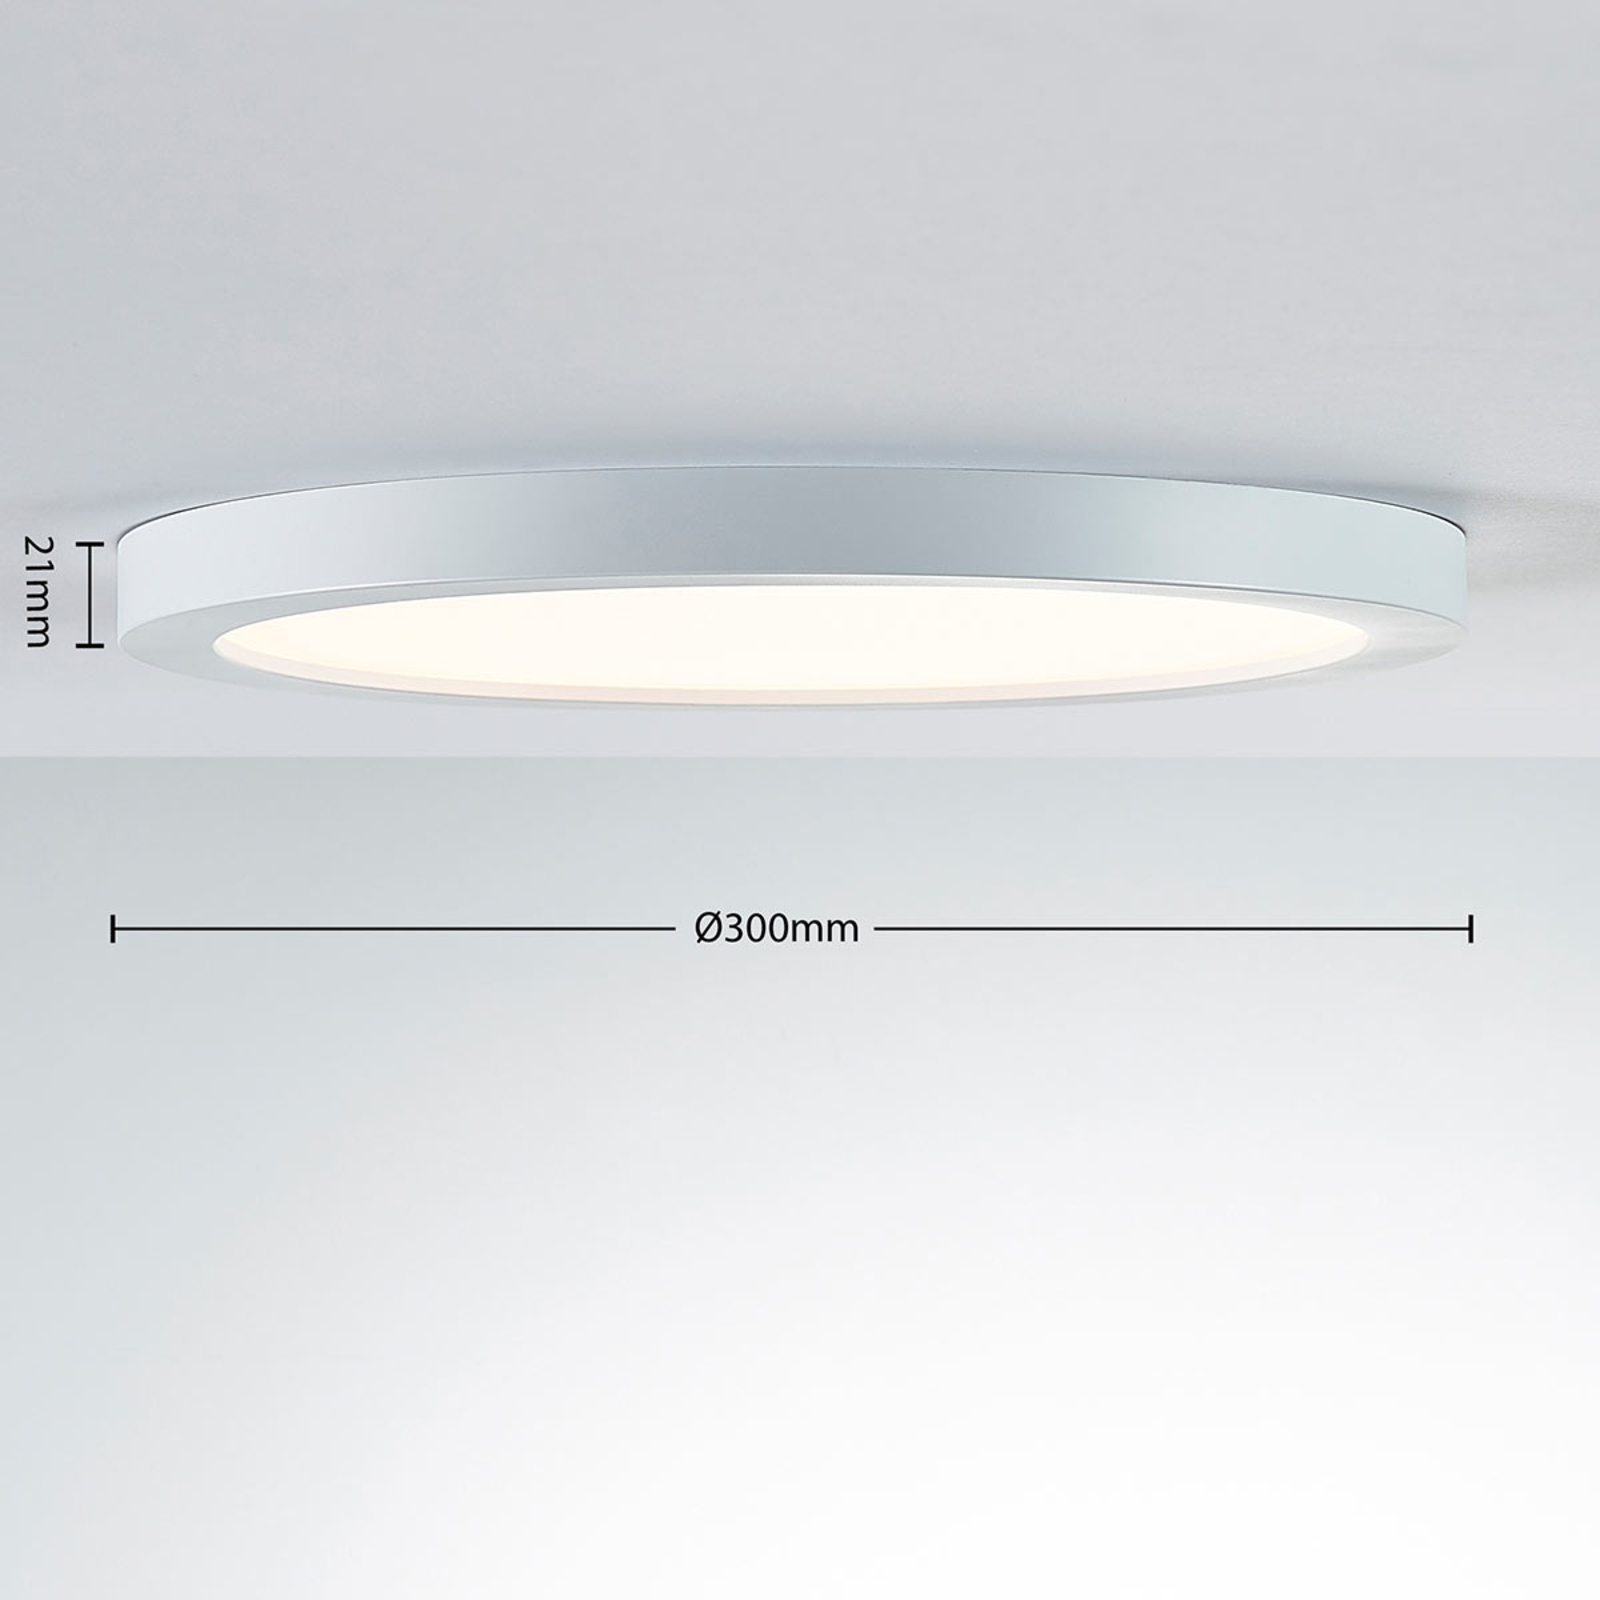 arm Verbergen Uitgebreid Dimbare LED plafondlamp Solvie in wit | Lampen24.nl